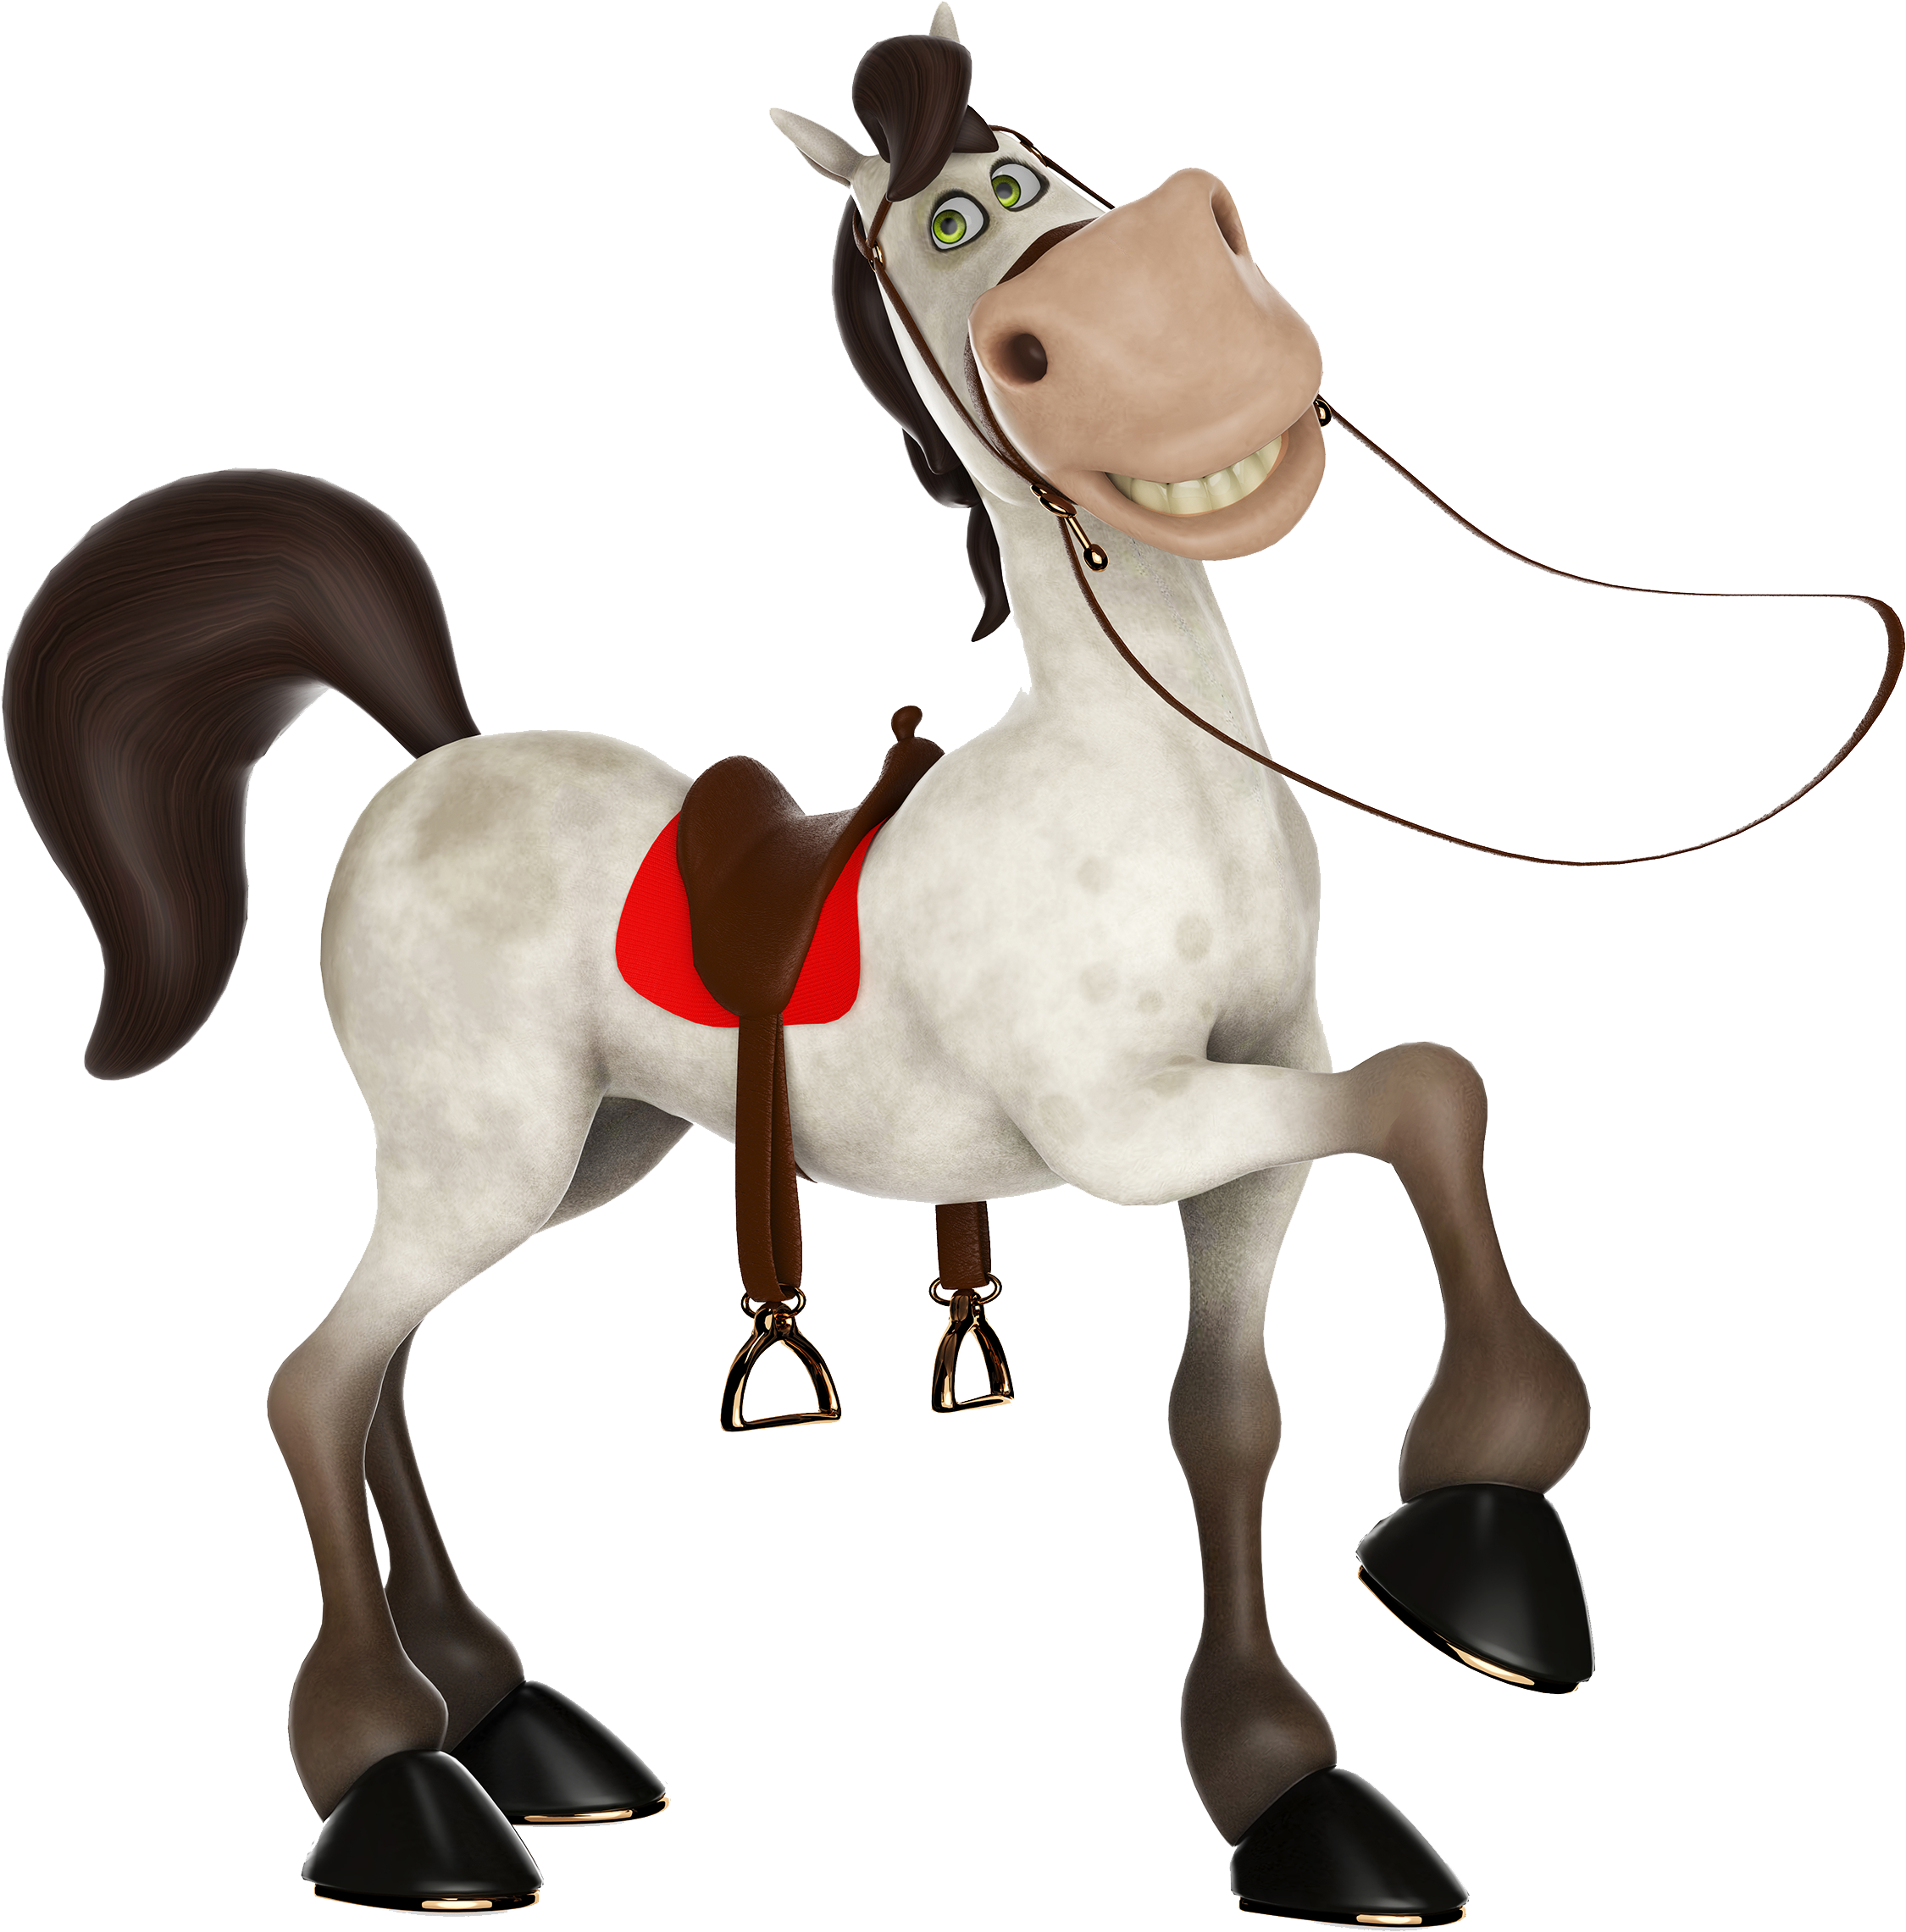 A Cartoon Horse With A Saddle